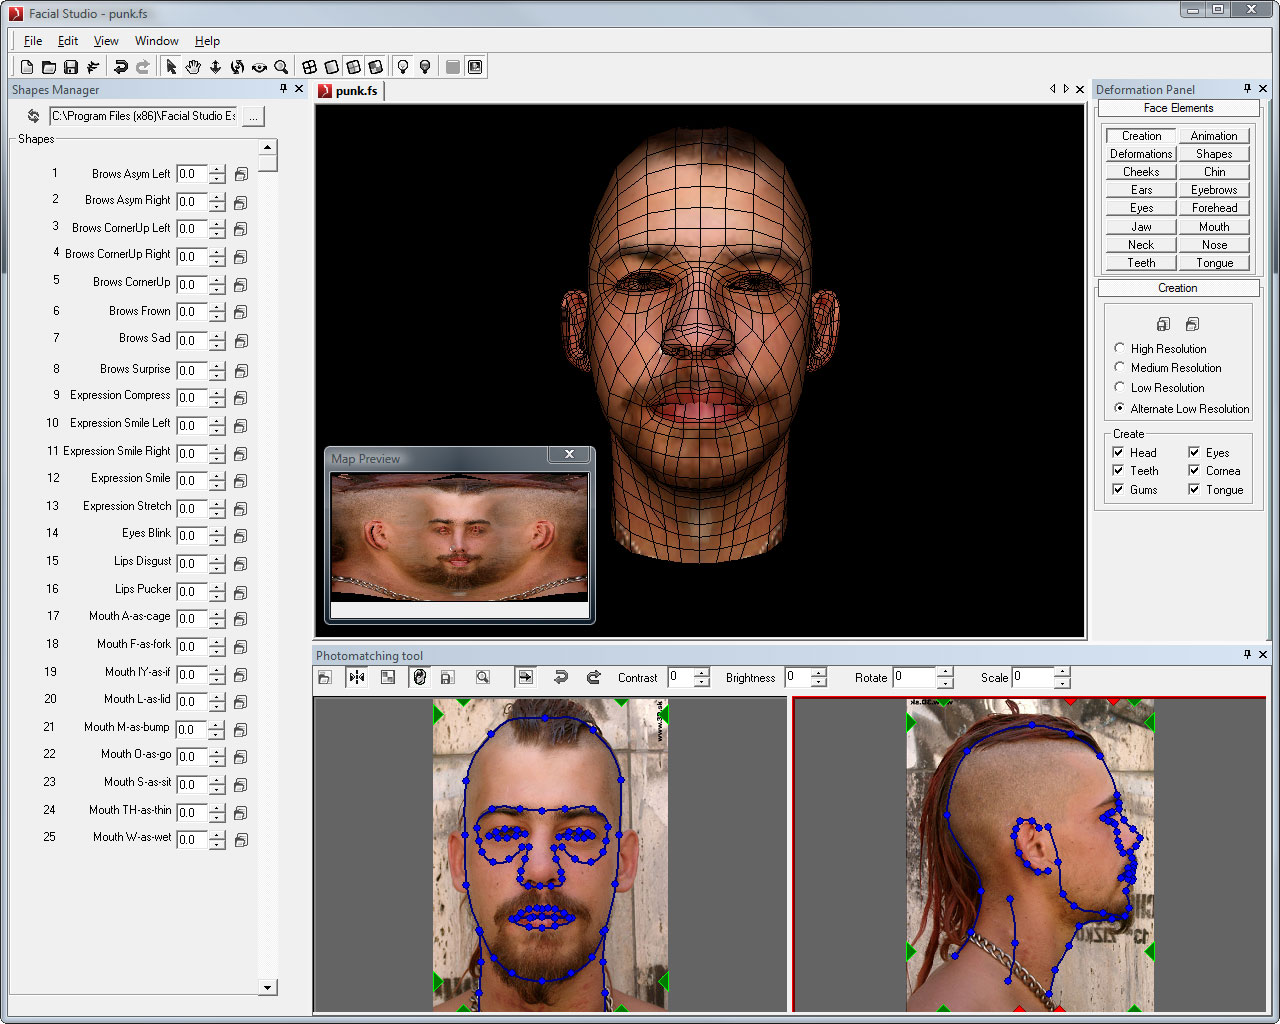 Facial Studio for Windows 3.0 software screenshot